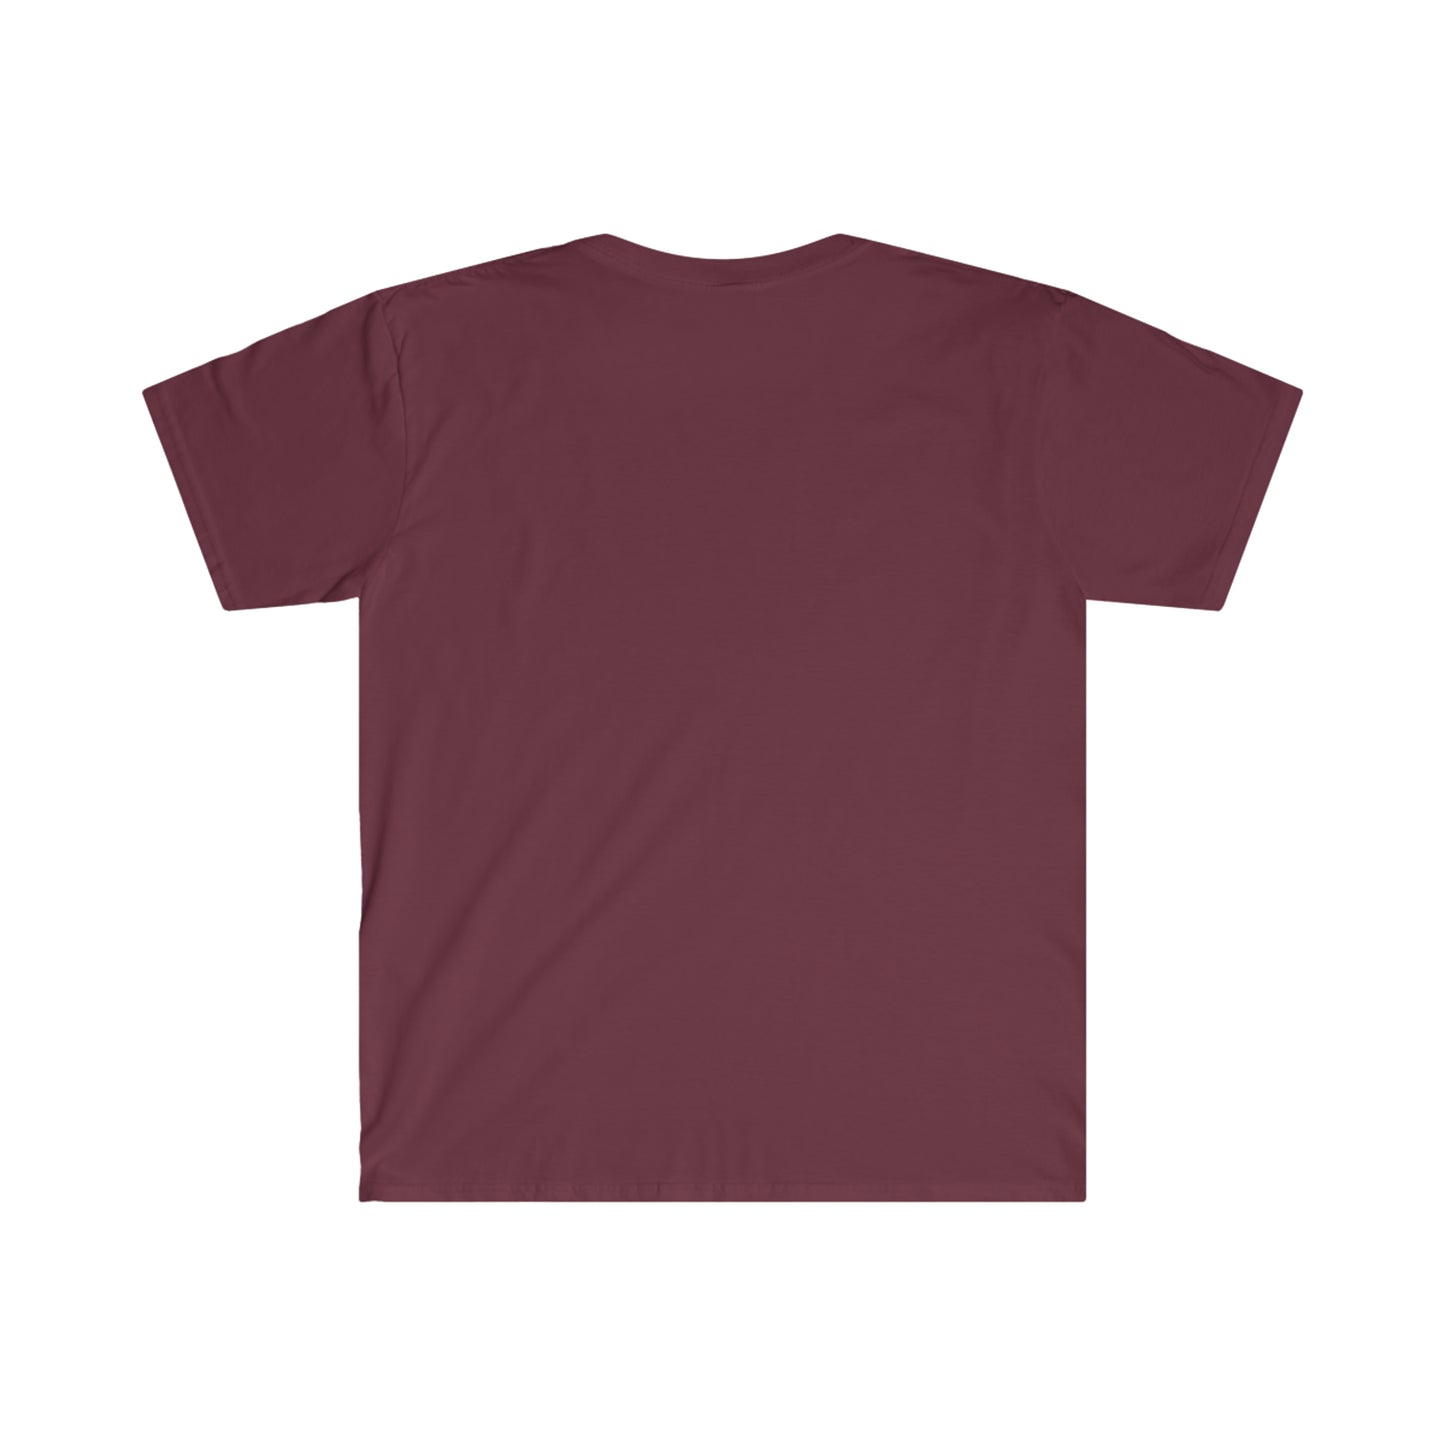 Meat Smoke Repeat Unisex Softstyle T-Shirt